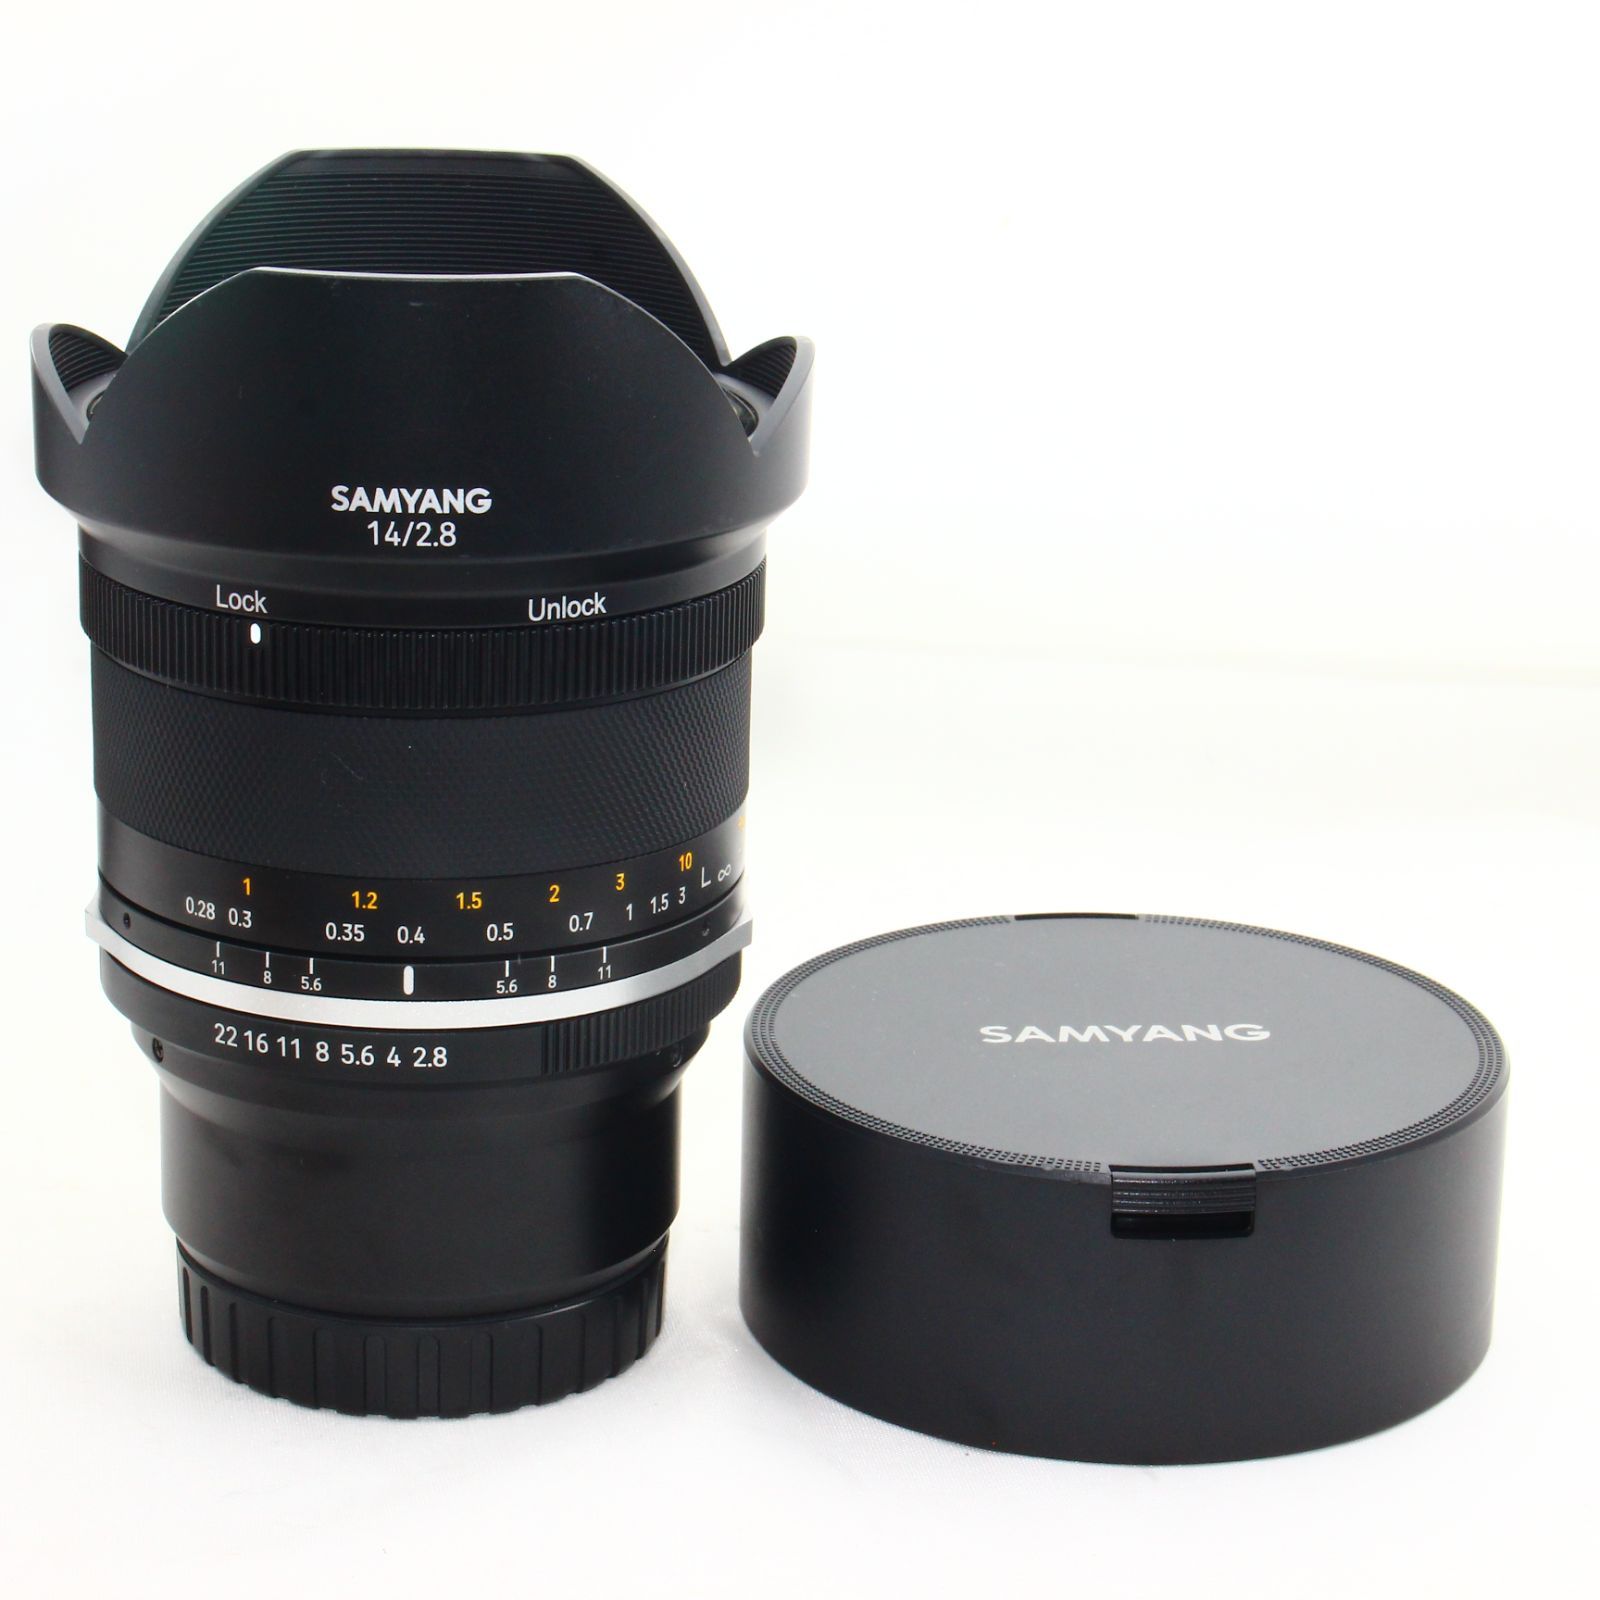 SAMYANG 14mm F2.8 キャノンEFマウント 単焦点広角レンズ - レンズ(単焦点)